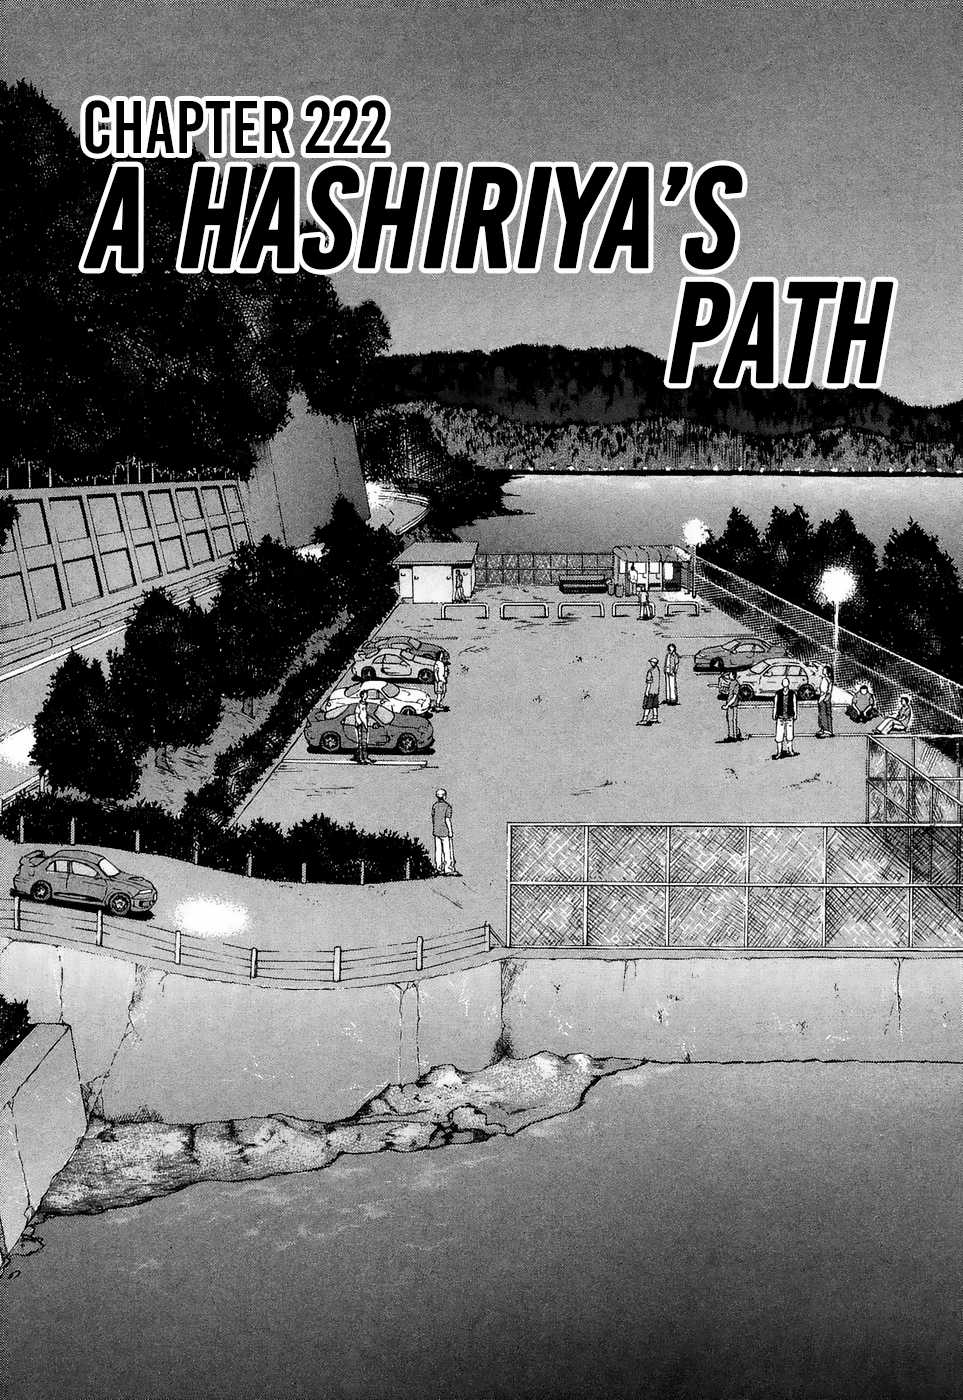 Over Rev! Chapter 222: A Hashiriya's Path